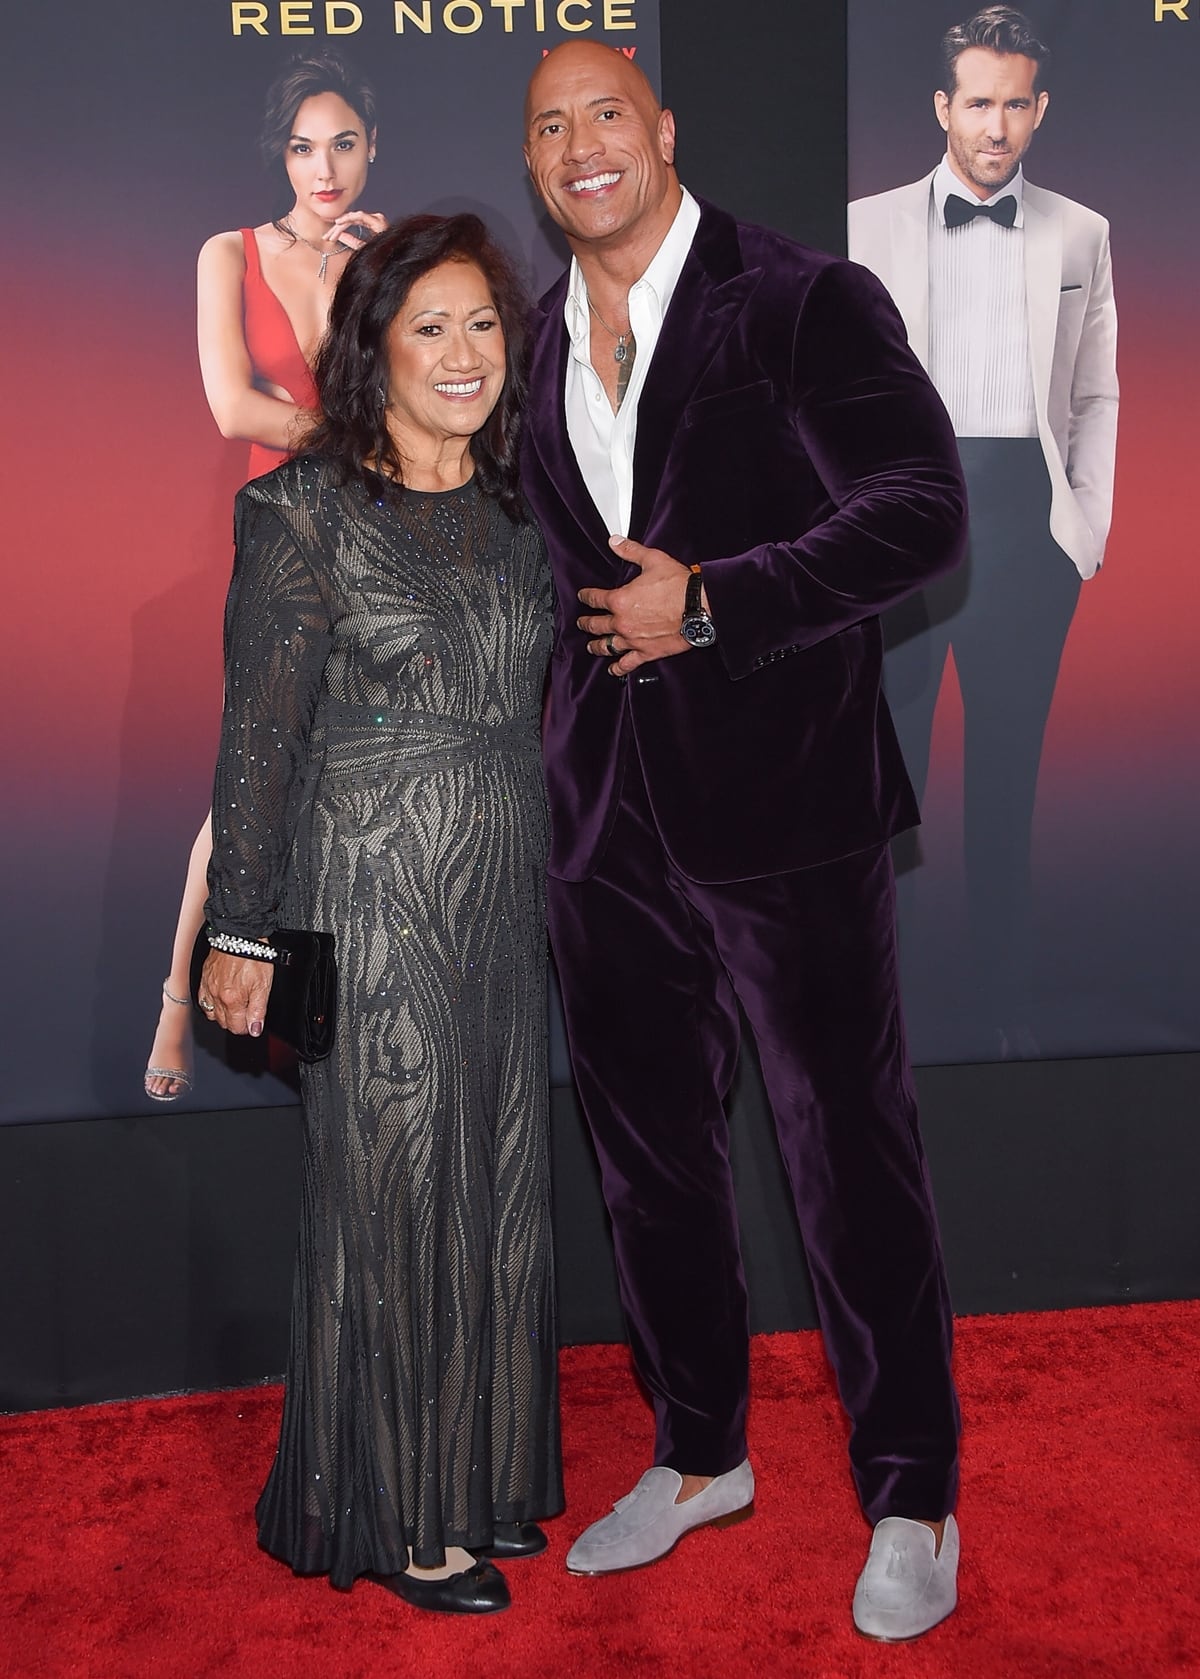 Dwayne Johnson with his much shorter mom Ata Johnson